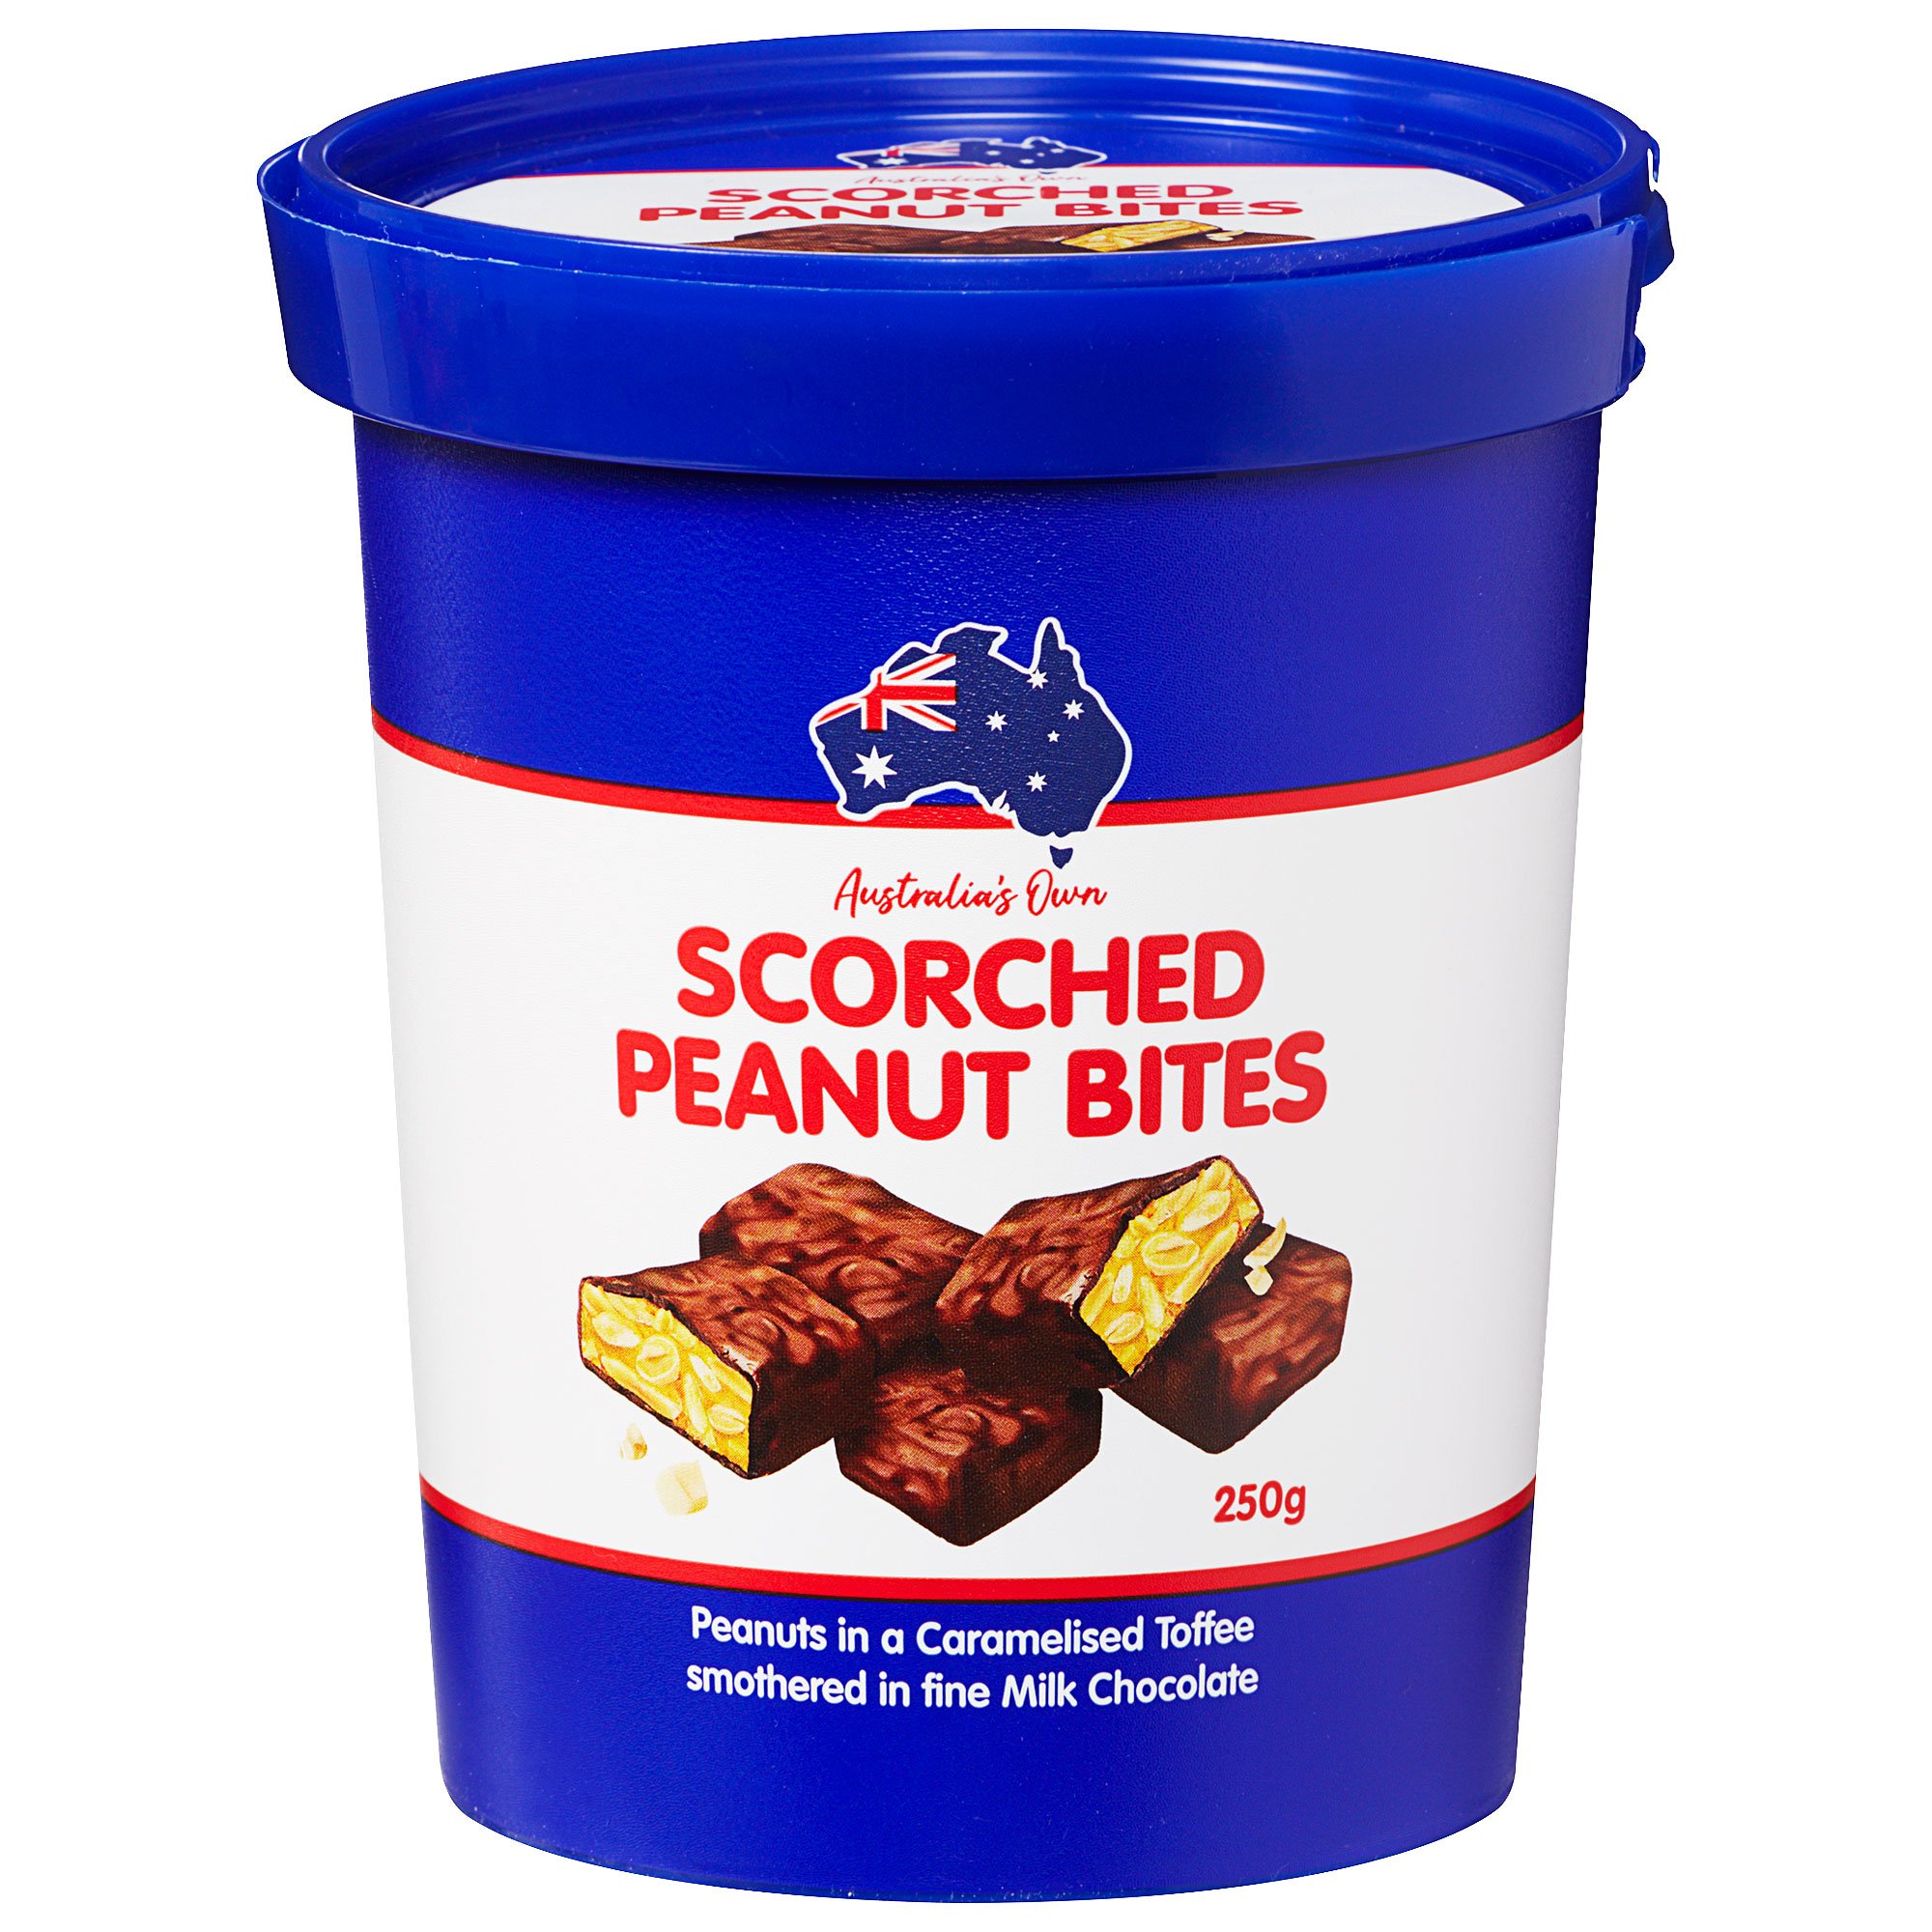 Buy Scorched Peanut Bites Tub 250g for $9